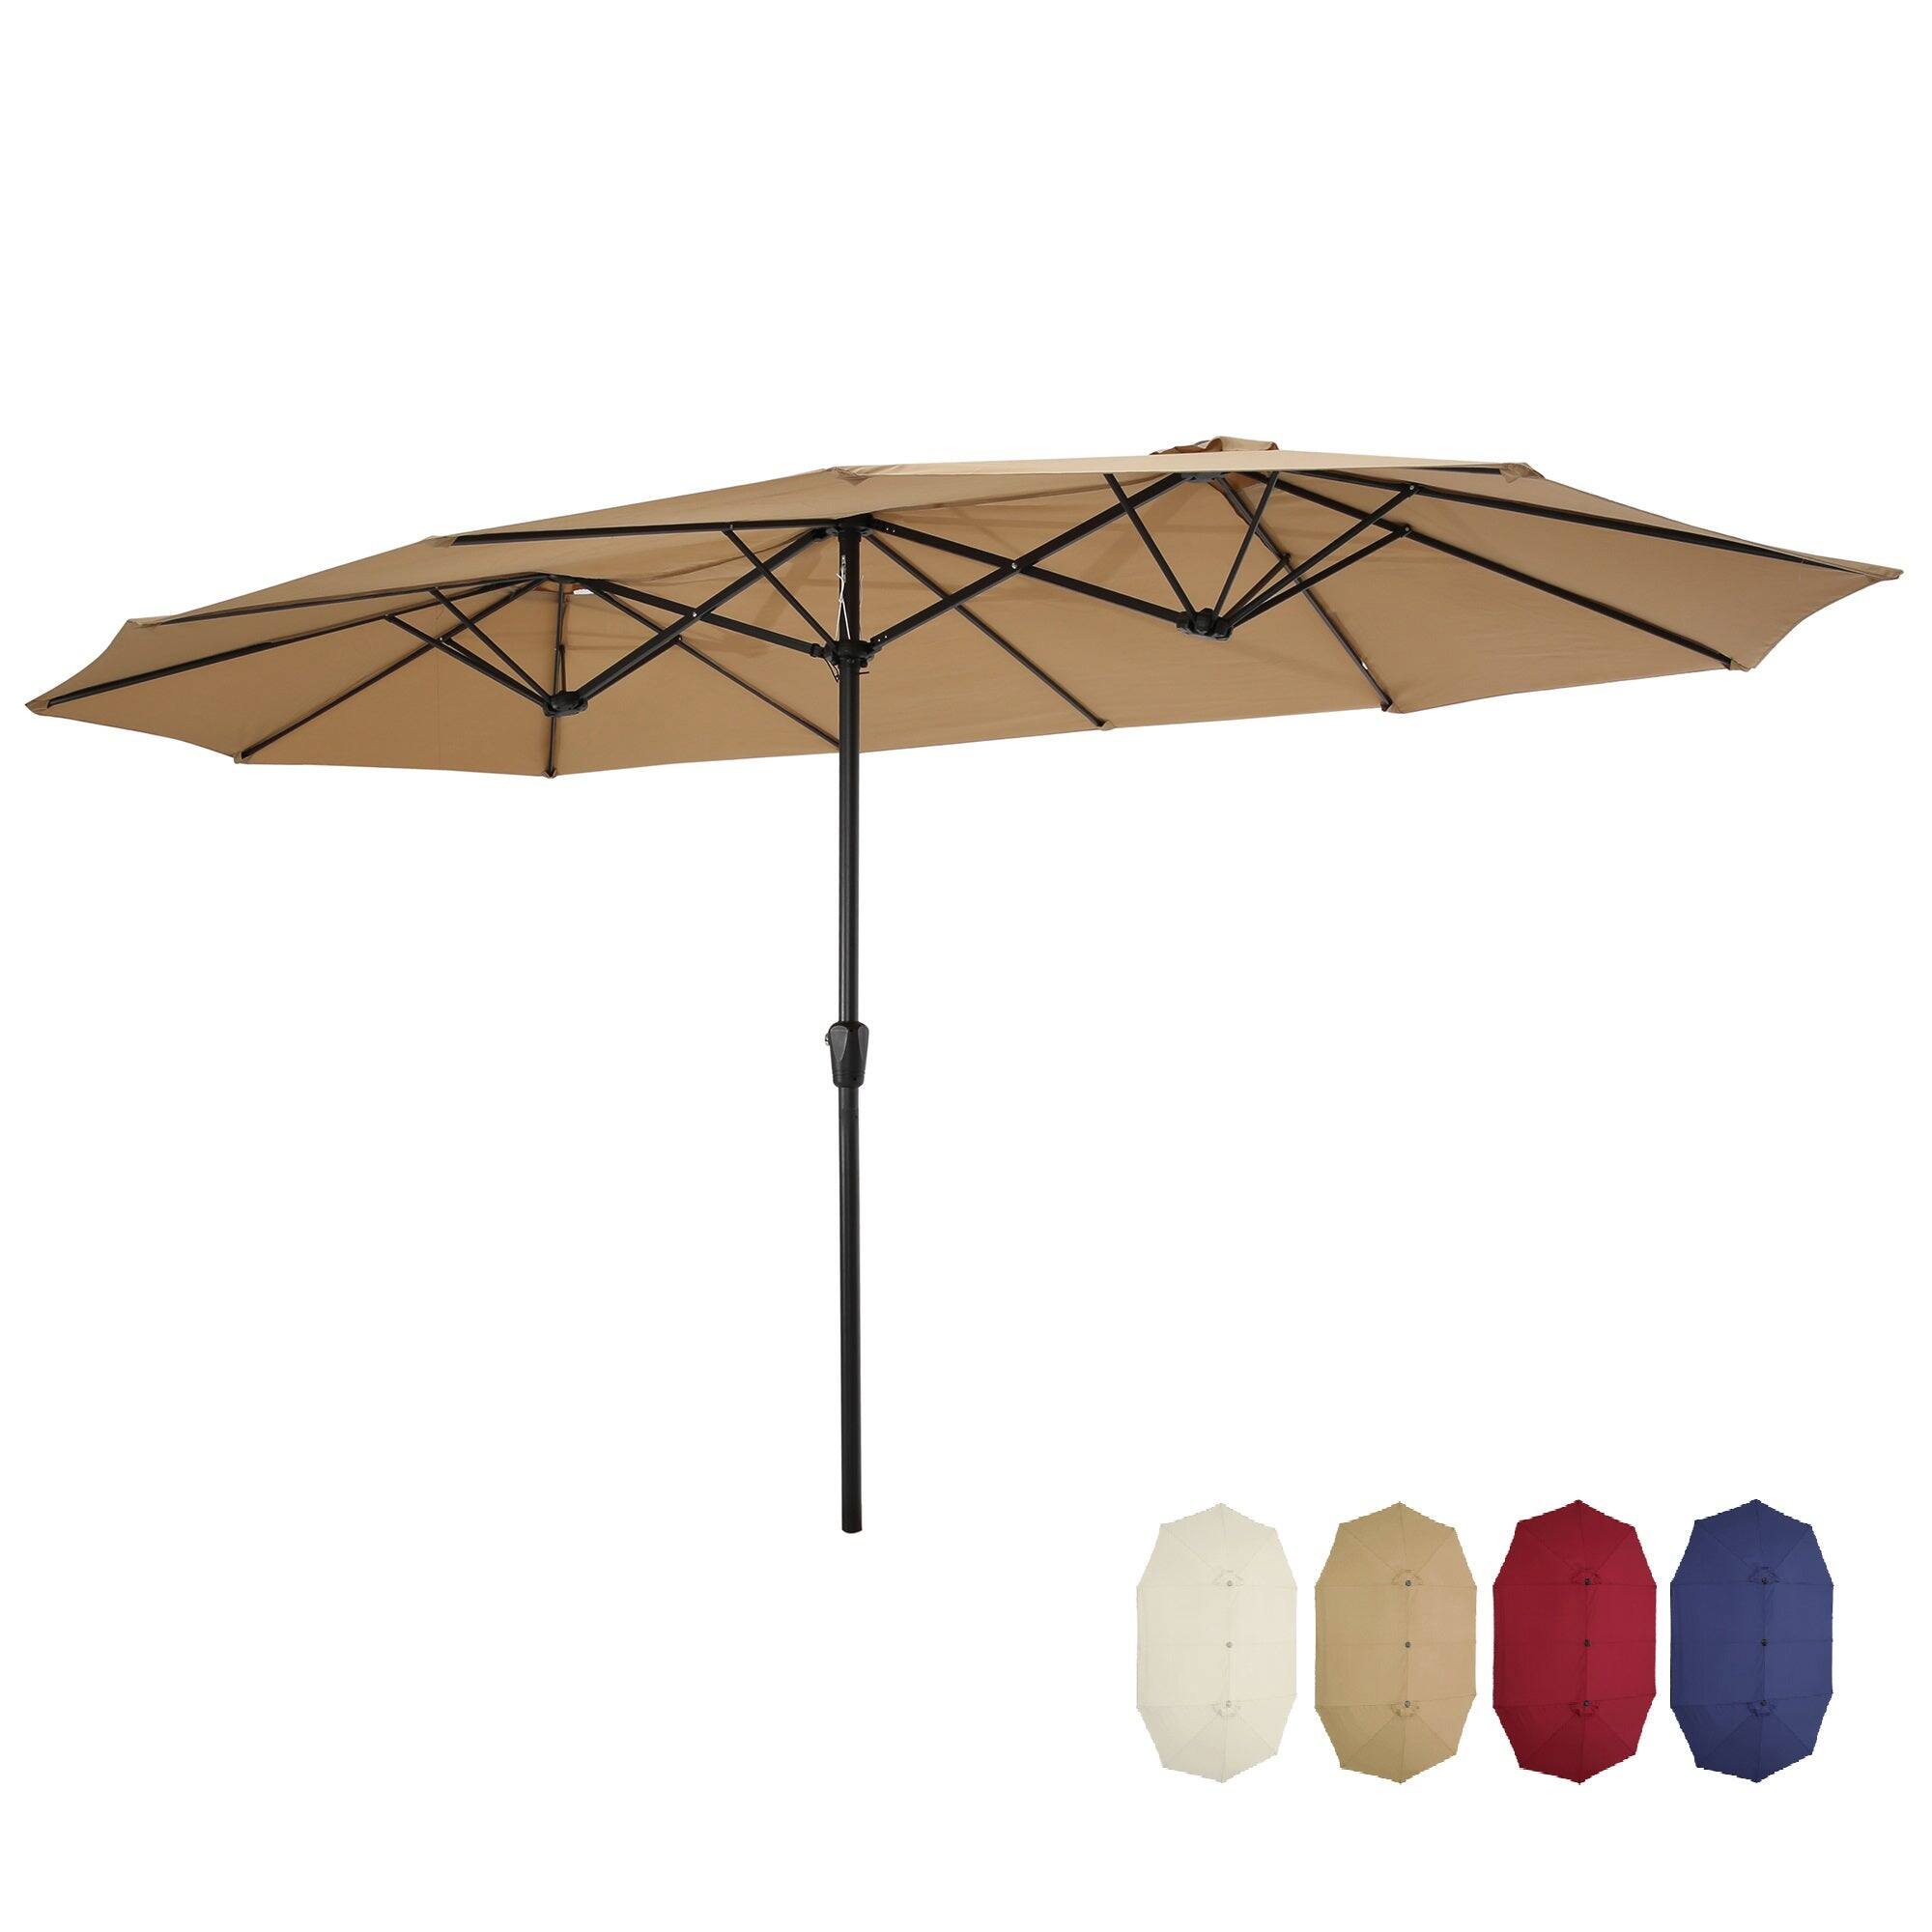 15' X 9' Steel Double Sided Rectangular Outdoor Market Patio Umbrella